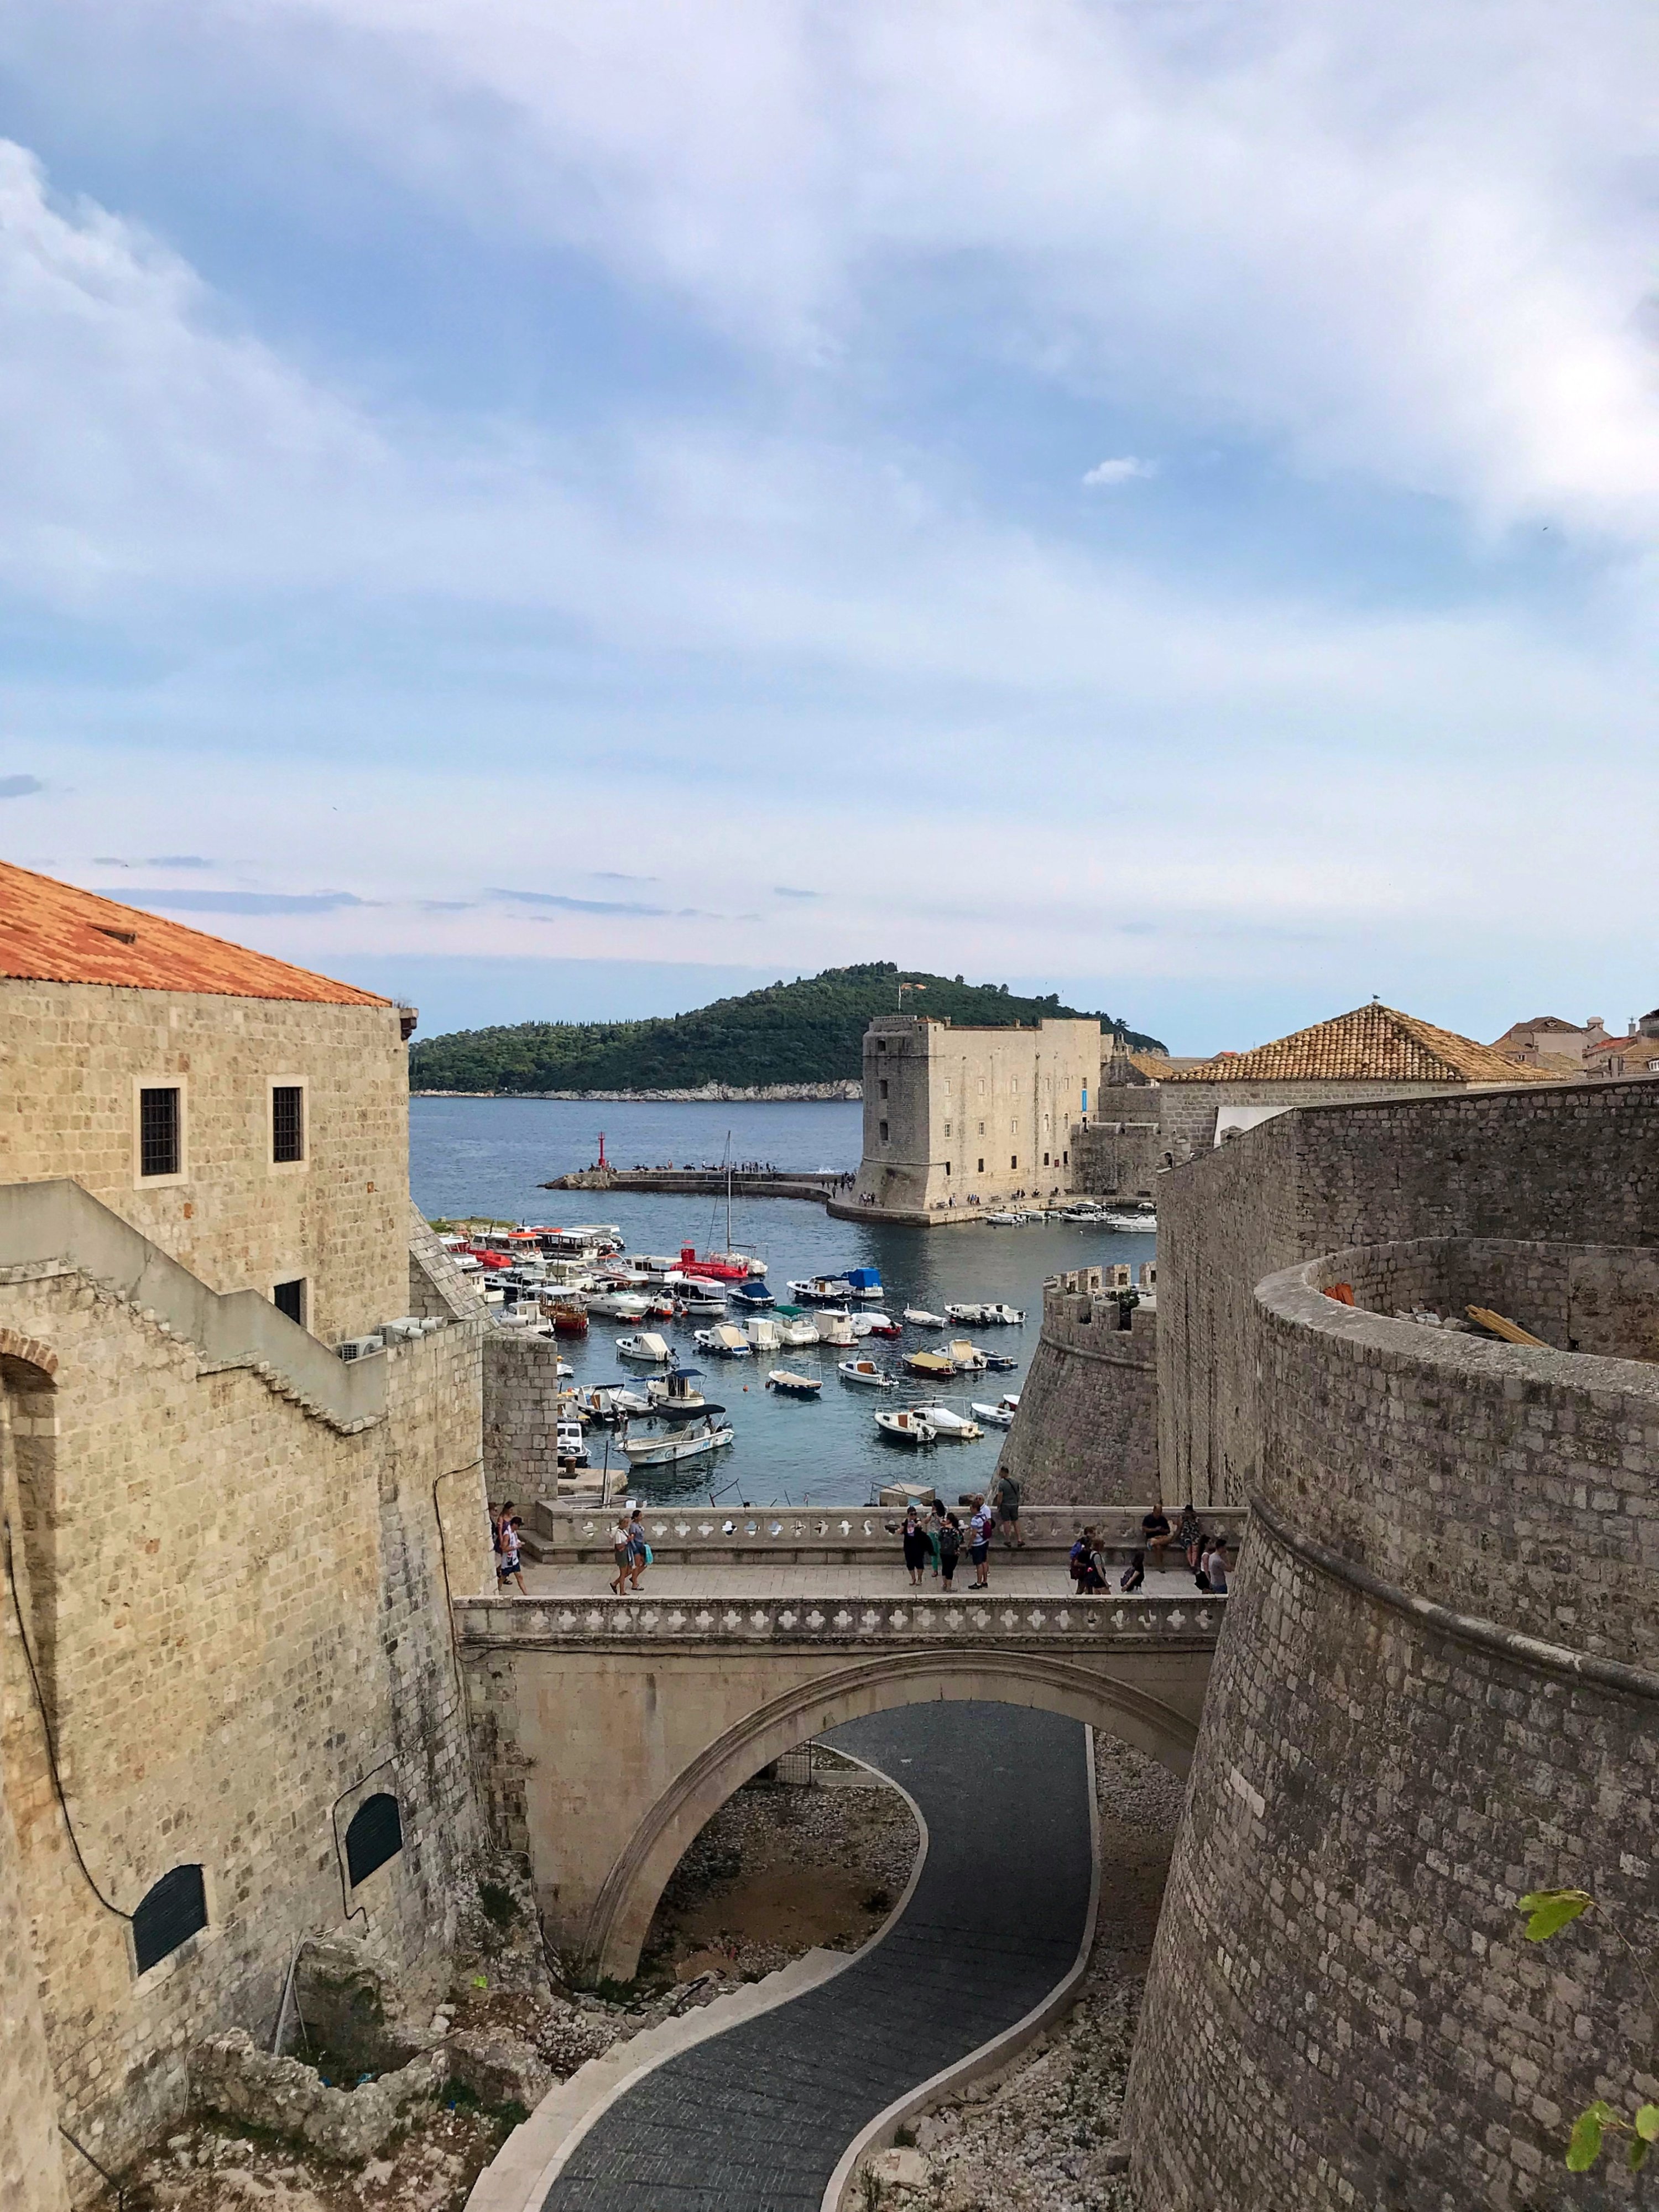 The Pile Gate of Stradun, in Dubrovnik, southern Croatia. (Photo by Özge Şengelen)